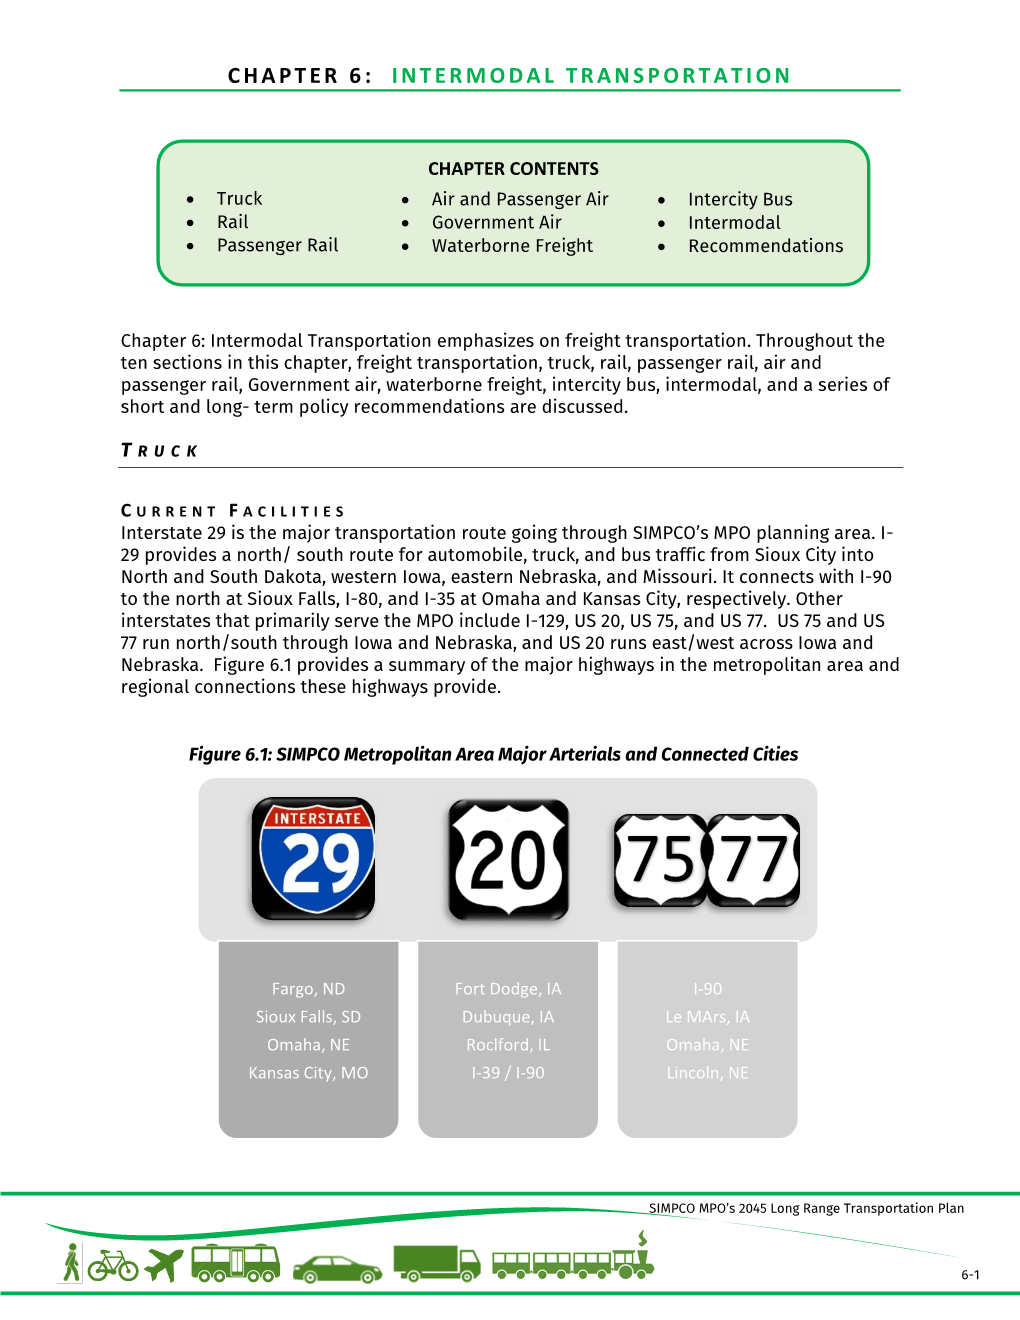 Chapter 6: Intermodal Transportation Emphasizes on Freight Transportation